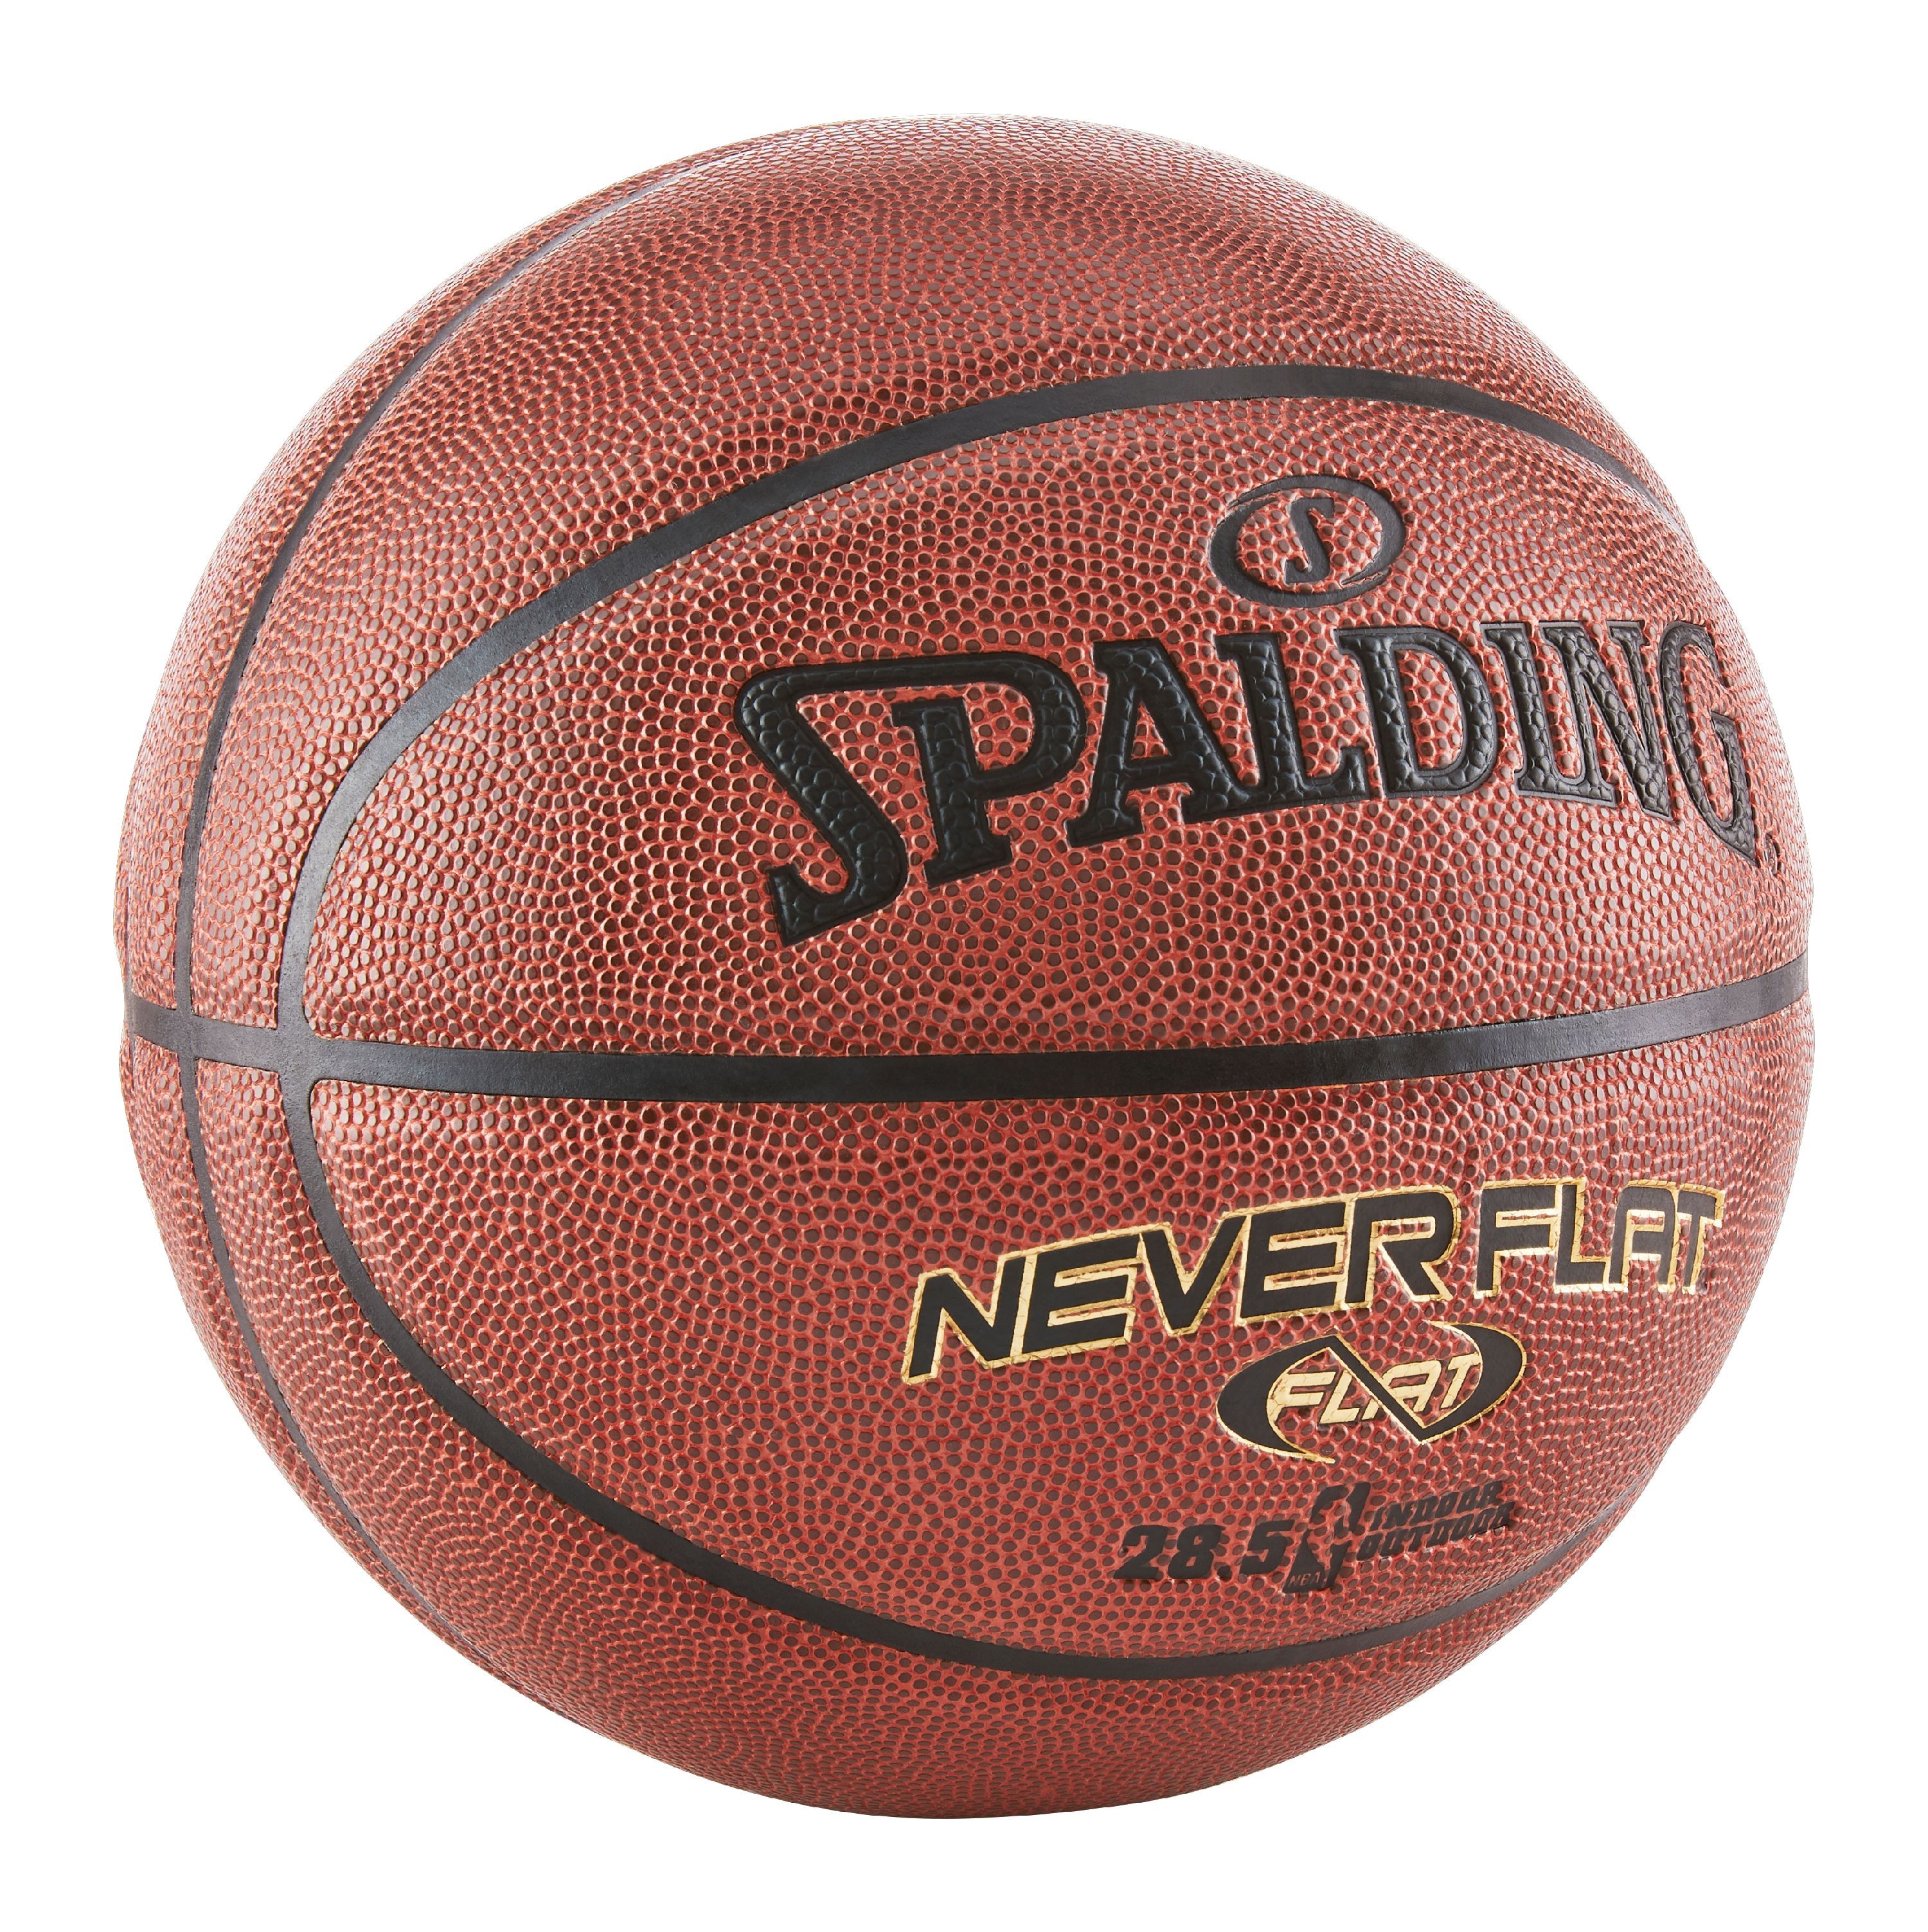 Spalding NBA Neverflat Premium Basketball - image 3 of 6